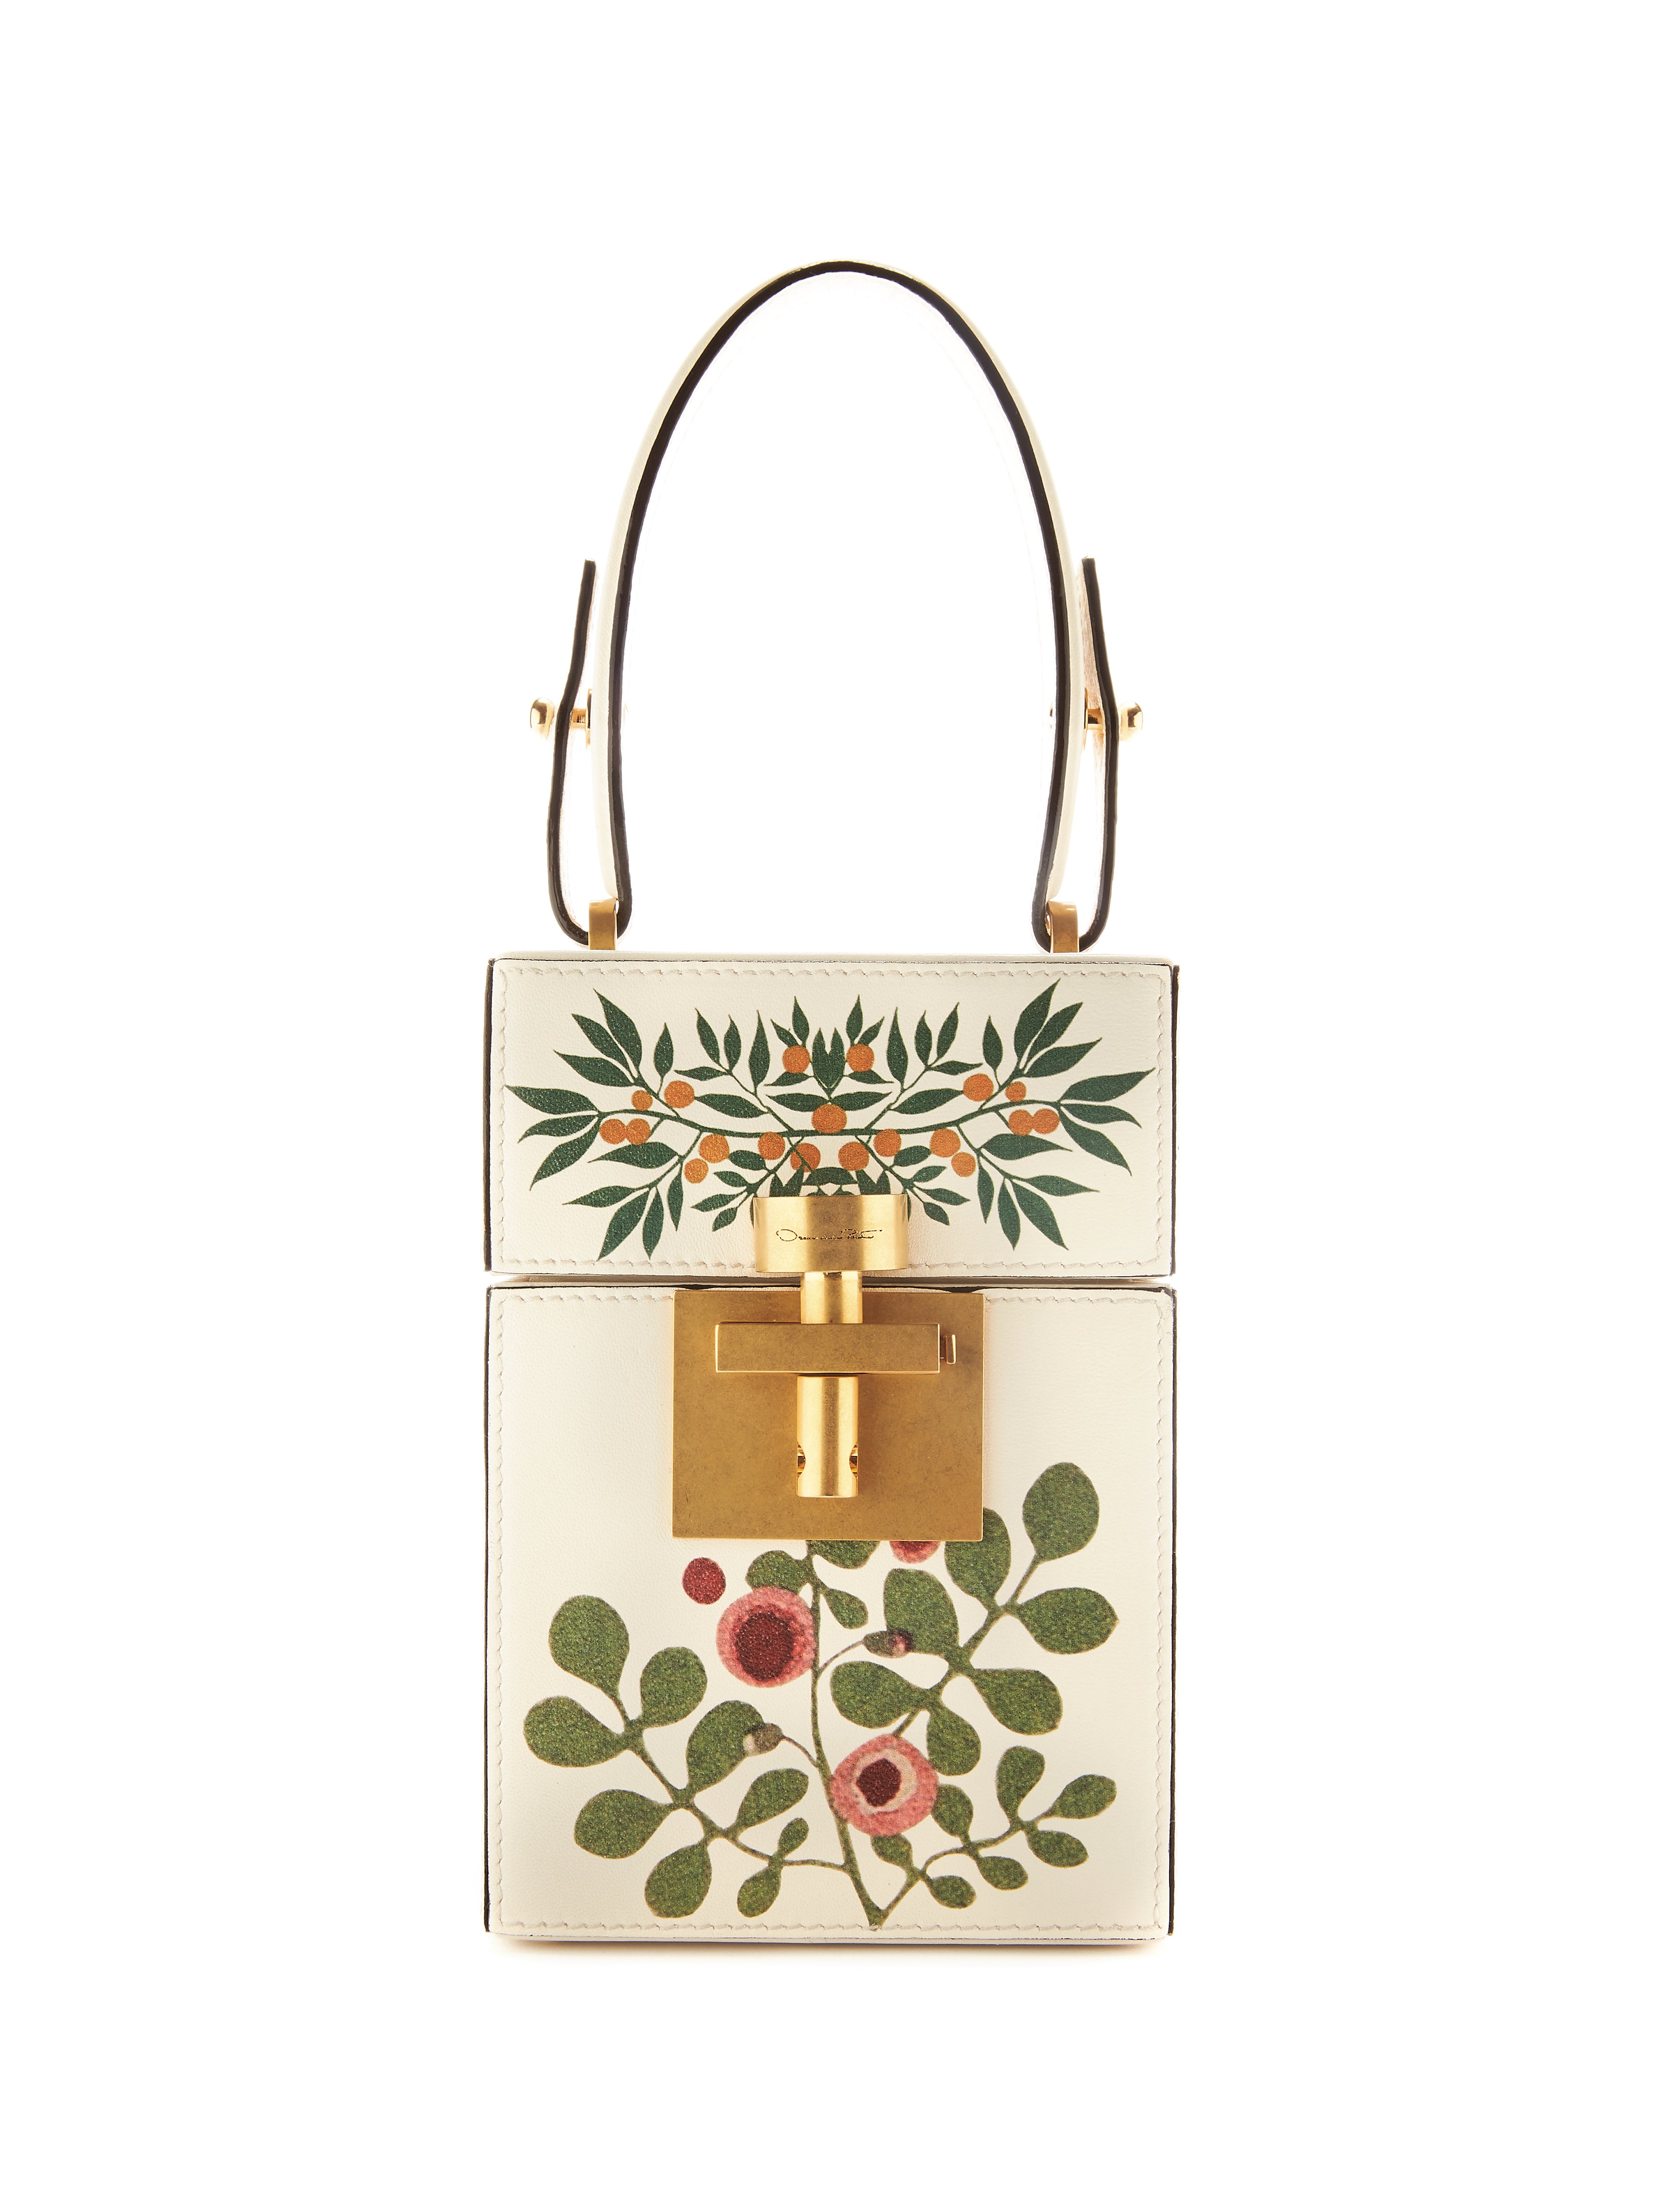 Oscar de la Renta leaf-embroidered white and gold Alibi handbag